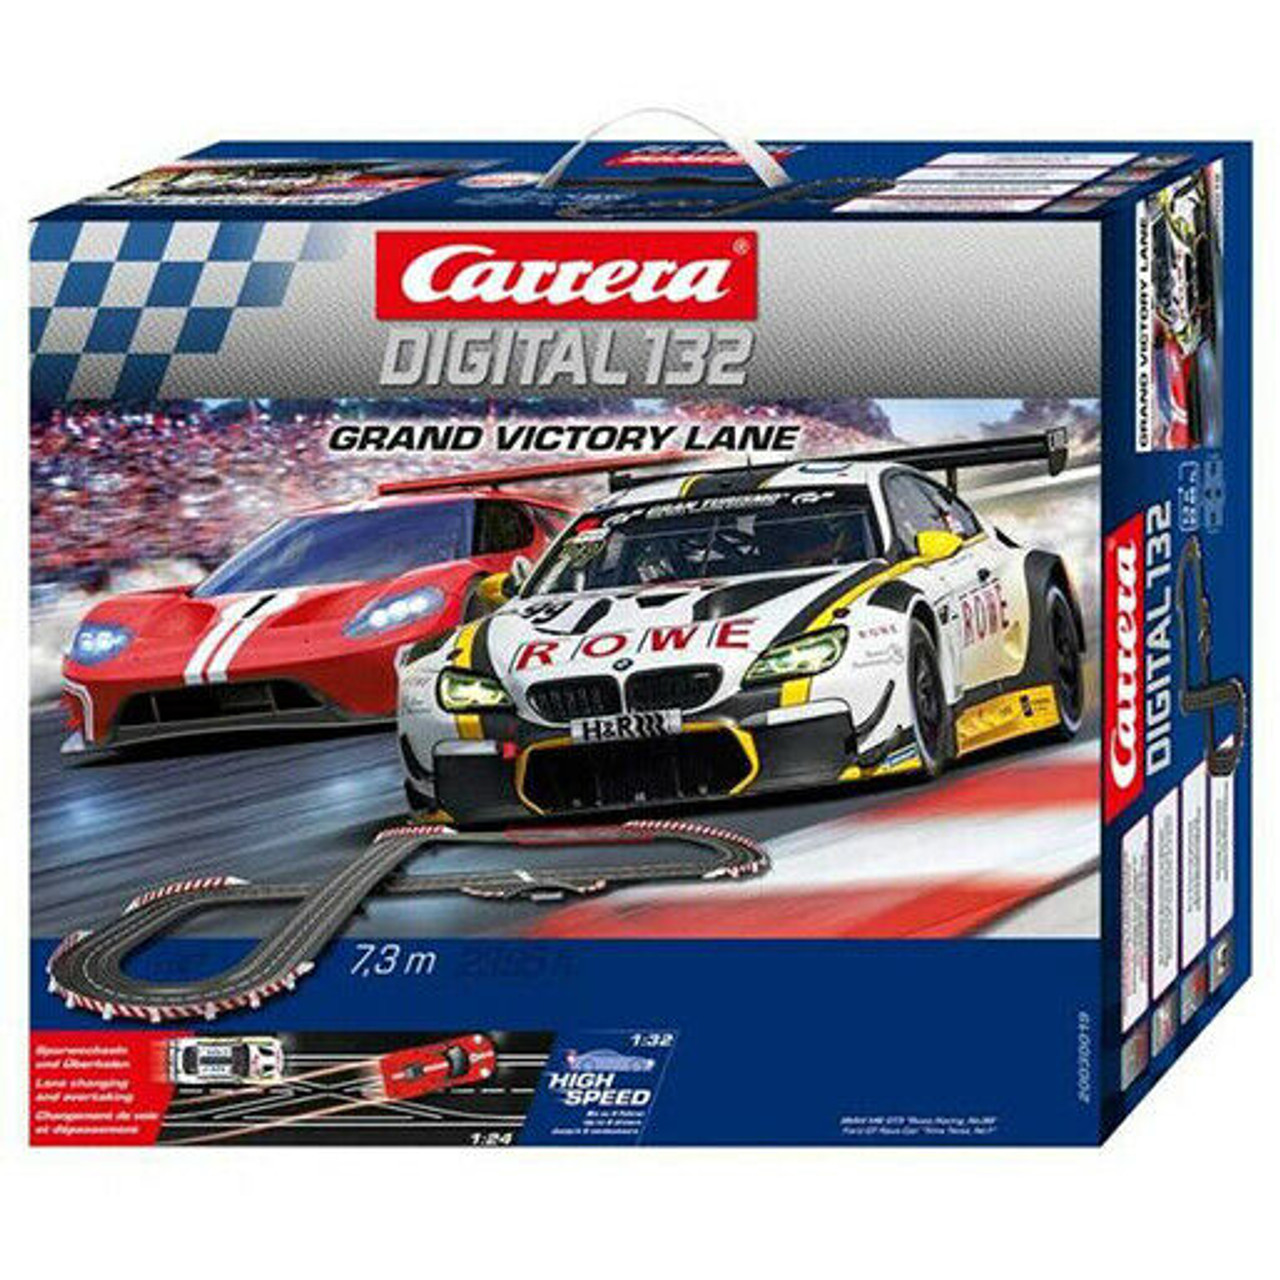 30019 Carrera Digital 132 Grand Victory Lane 1:32 Slot Car Racing Set -  Great Traditions